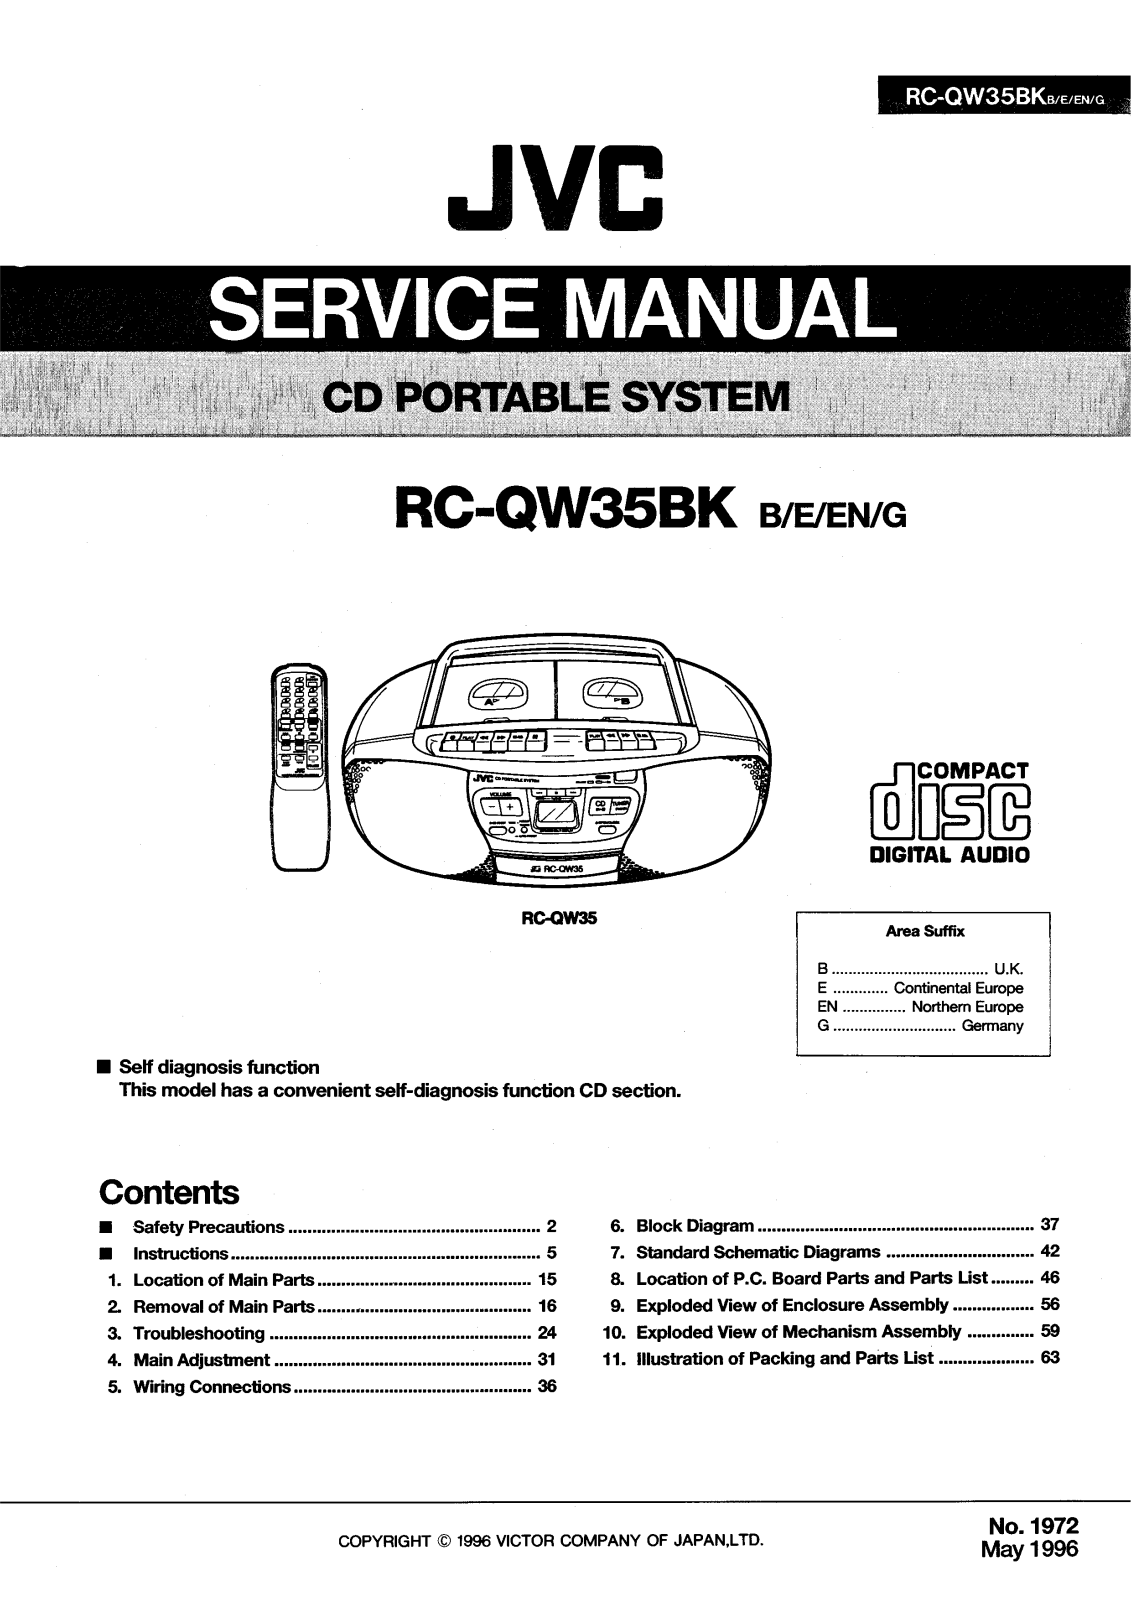 JVC RC-QW35BKB, RC-QW35BKE, RC-QW35BKEN, RC-QW35BKG Service Manual